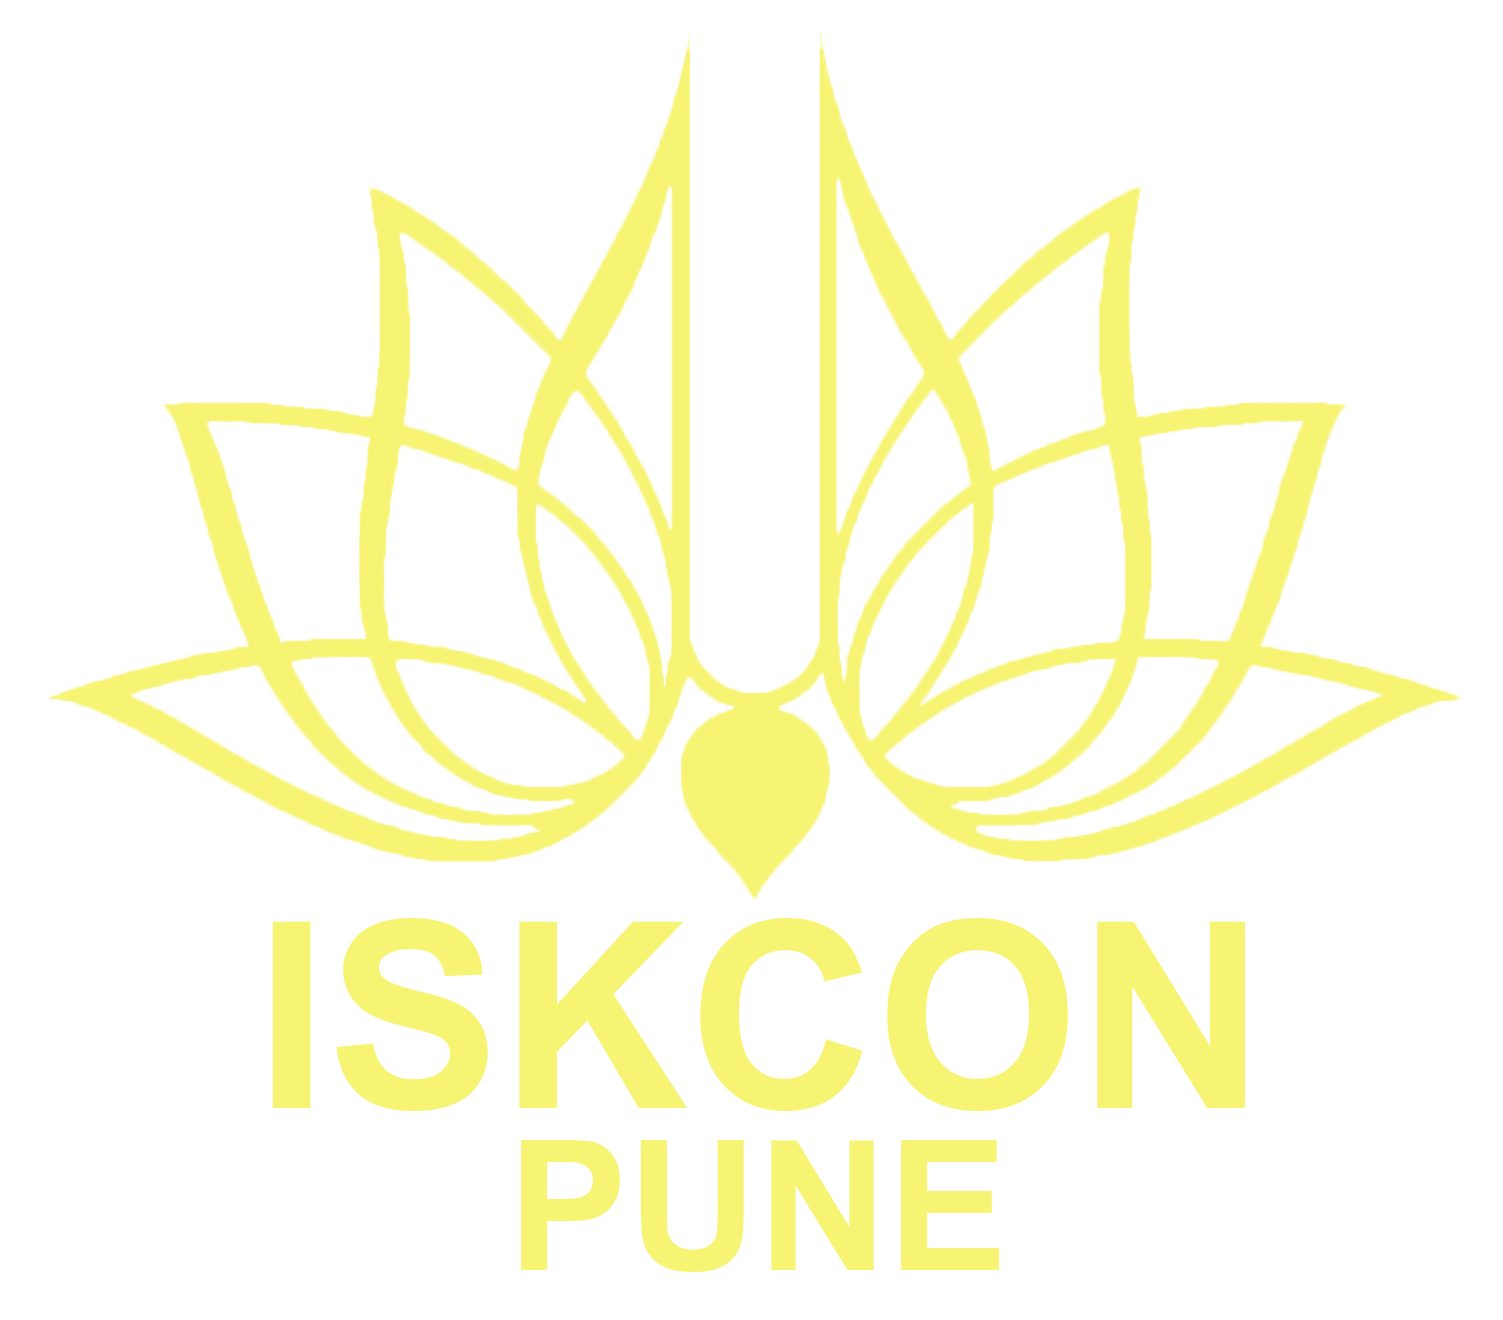 ISKCON Punjabi Bagh